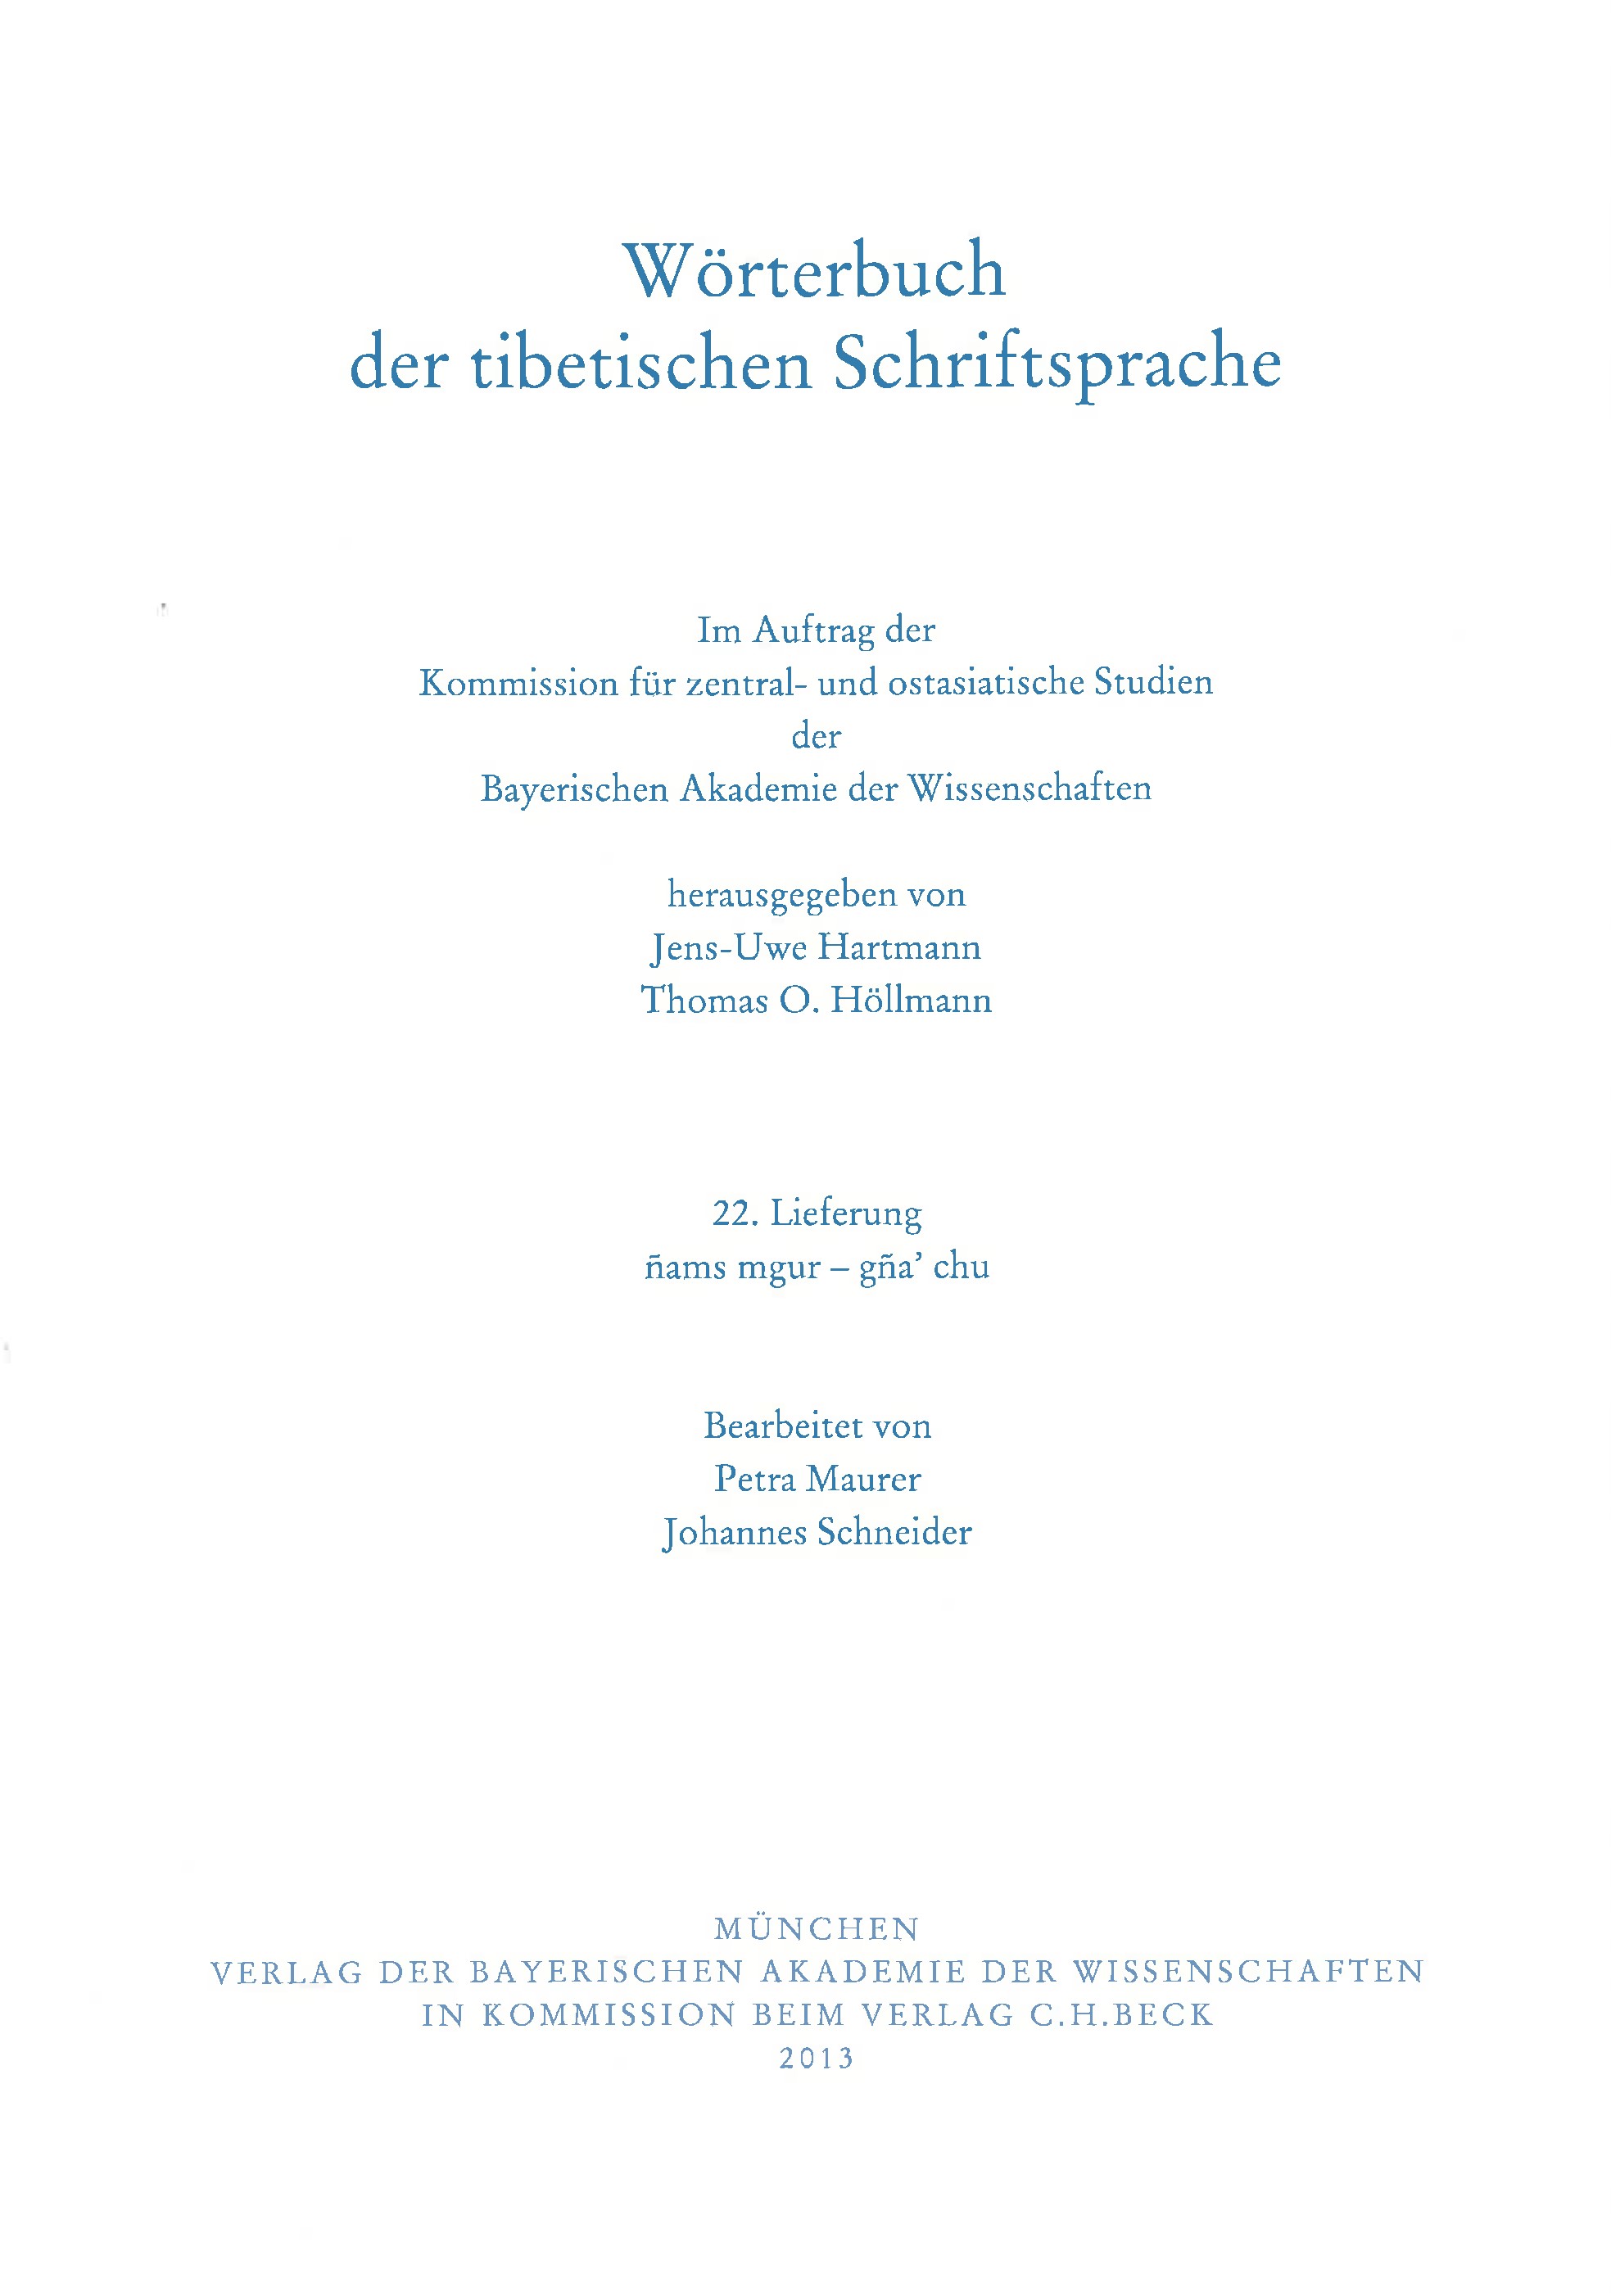 Cover: Maurer, Petra / Schneider, Johannes / Hartmann, Jens-Uwe / Höllmann, Thomas O., Wörterbuch der tibetischen Schriftsprache  22. Lieferung